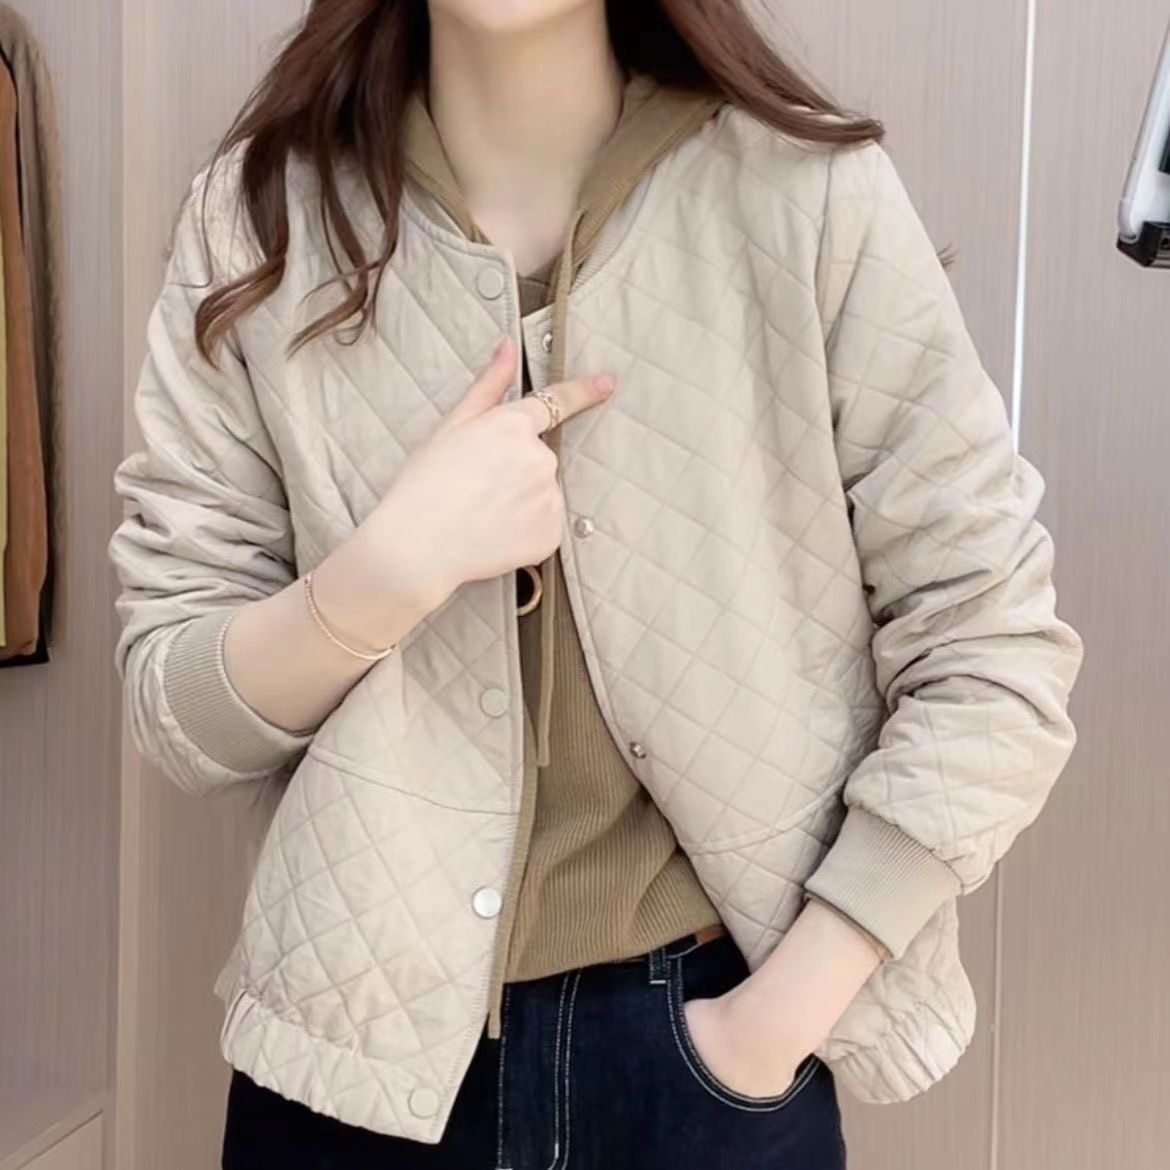 Women's short coat 2022 spring and autumn new Korean style casual fashion Hong Kong style diamond plaid jacket cardigan top